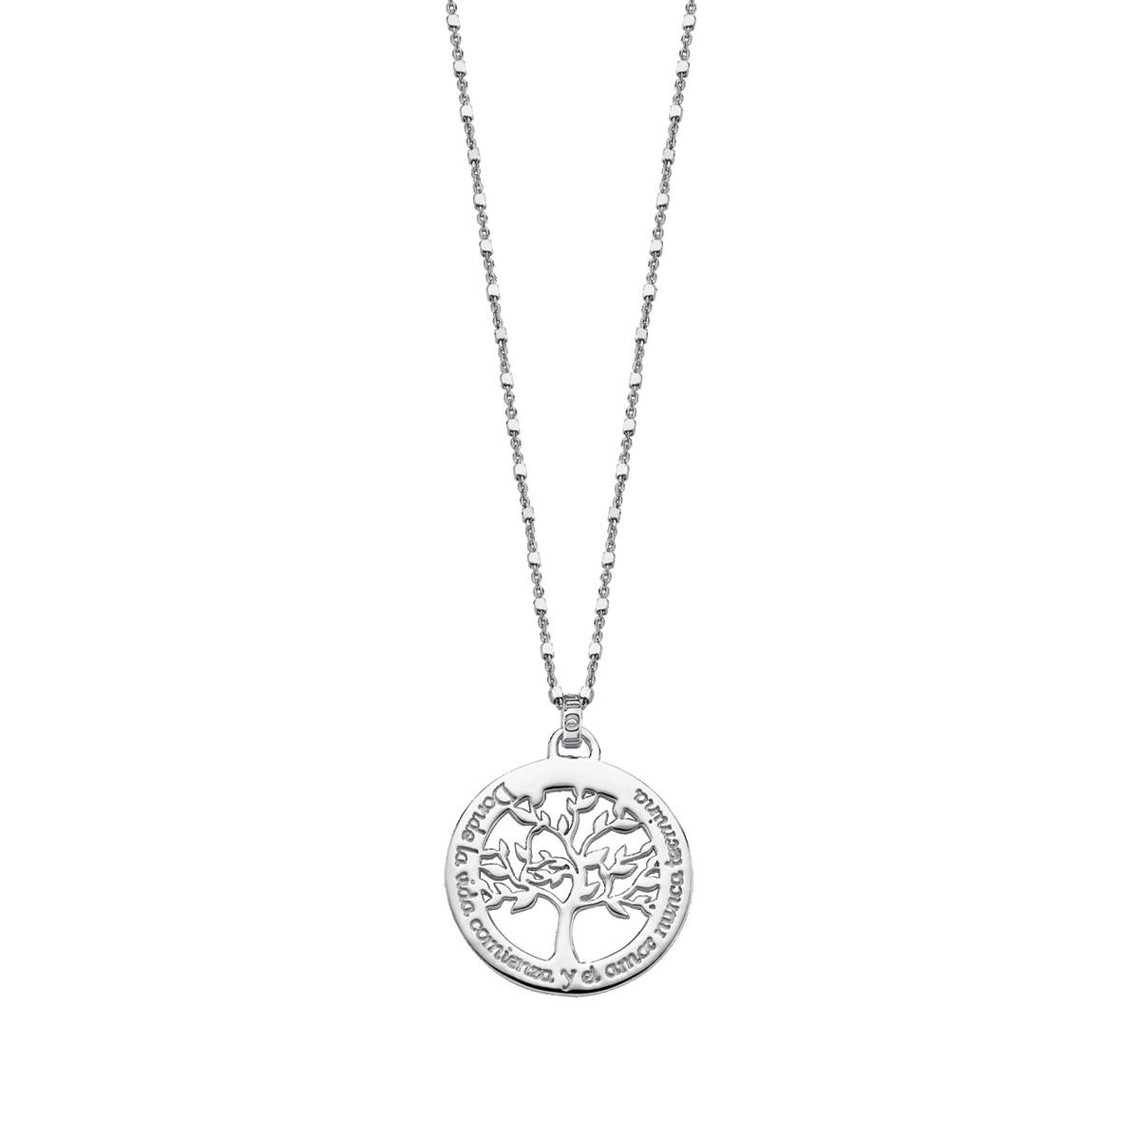 collier et pendentif lotus silver tree of life lp1641-1-1 - collier et pendentif tree of life argentlotus silver